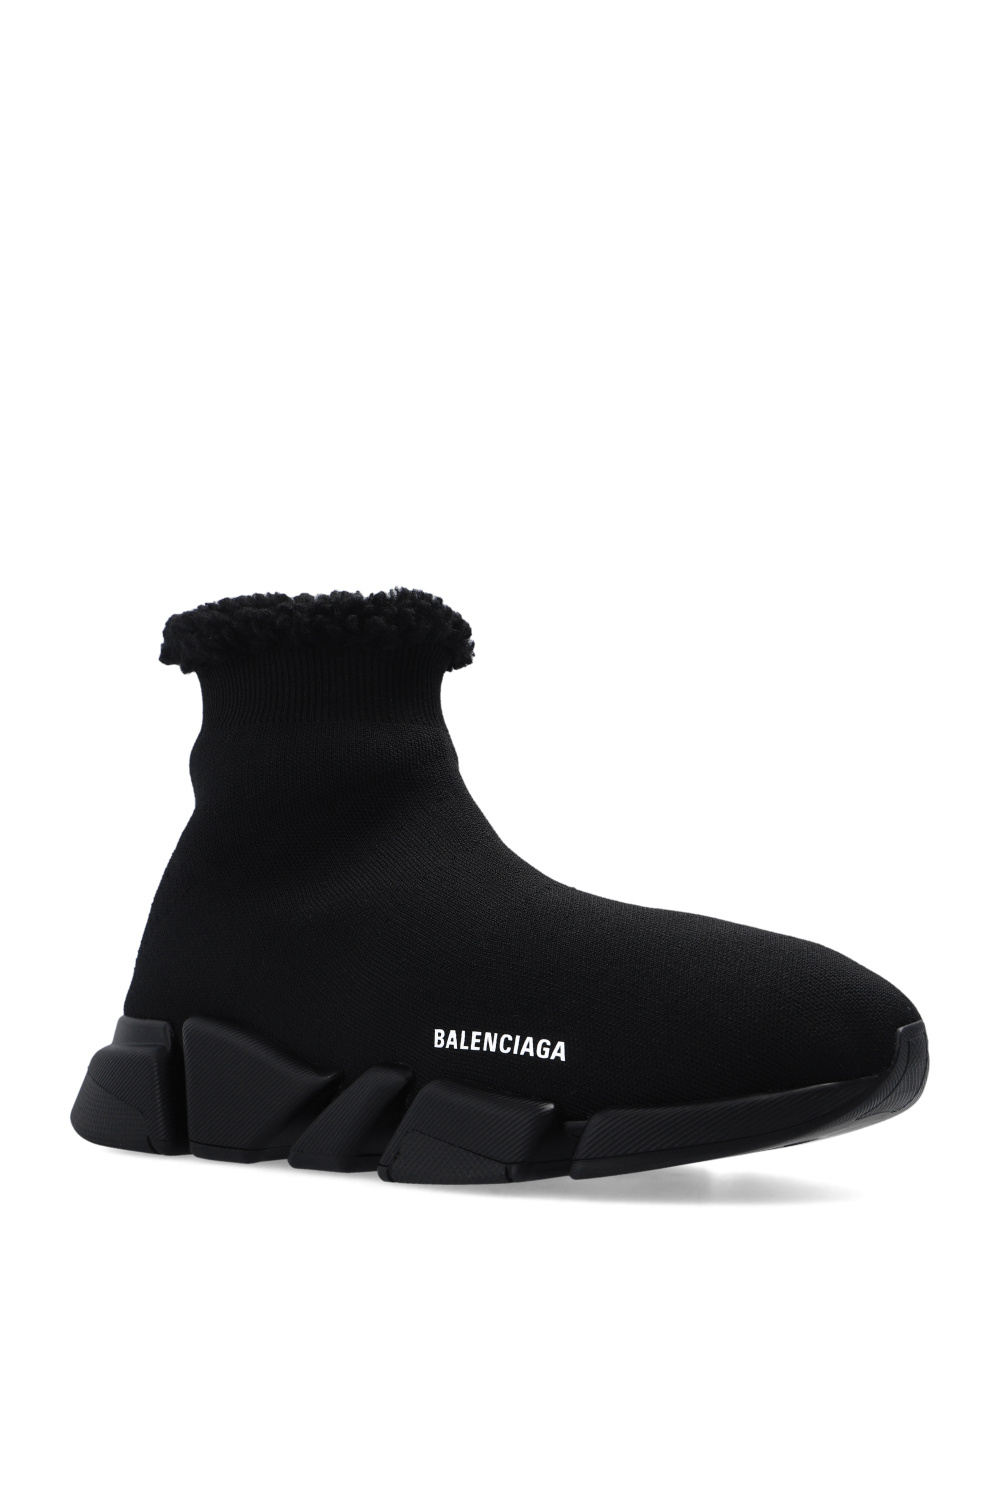 IetpShops - zapatillas de running Merrell merrell talla 37.5 negras - 'Speed LT' sock sneakers Balenciaga